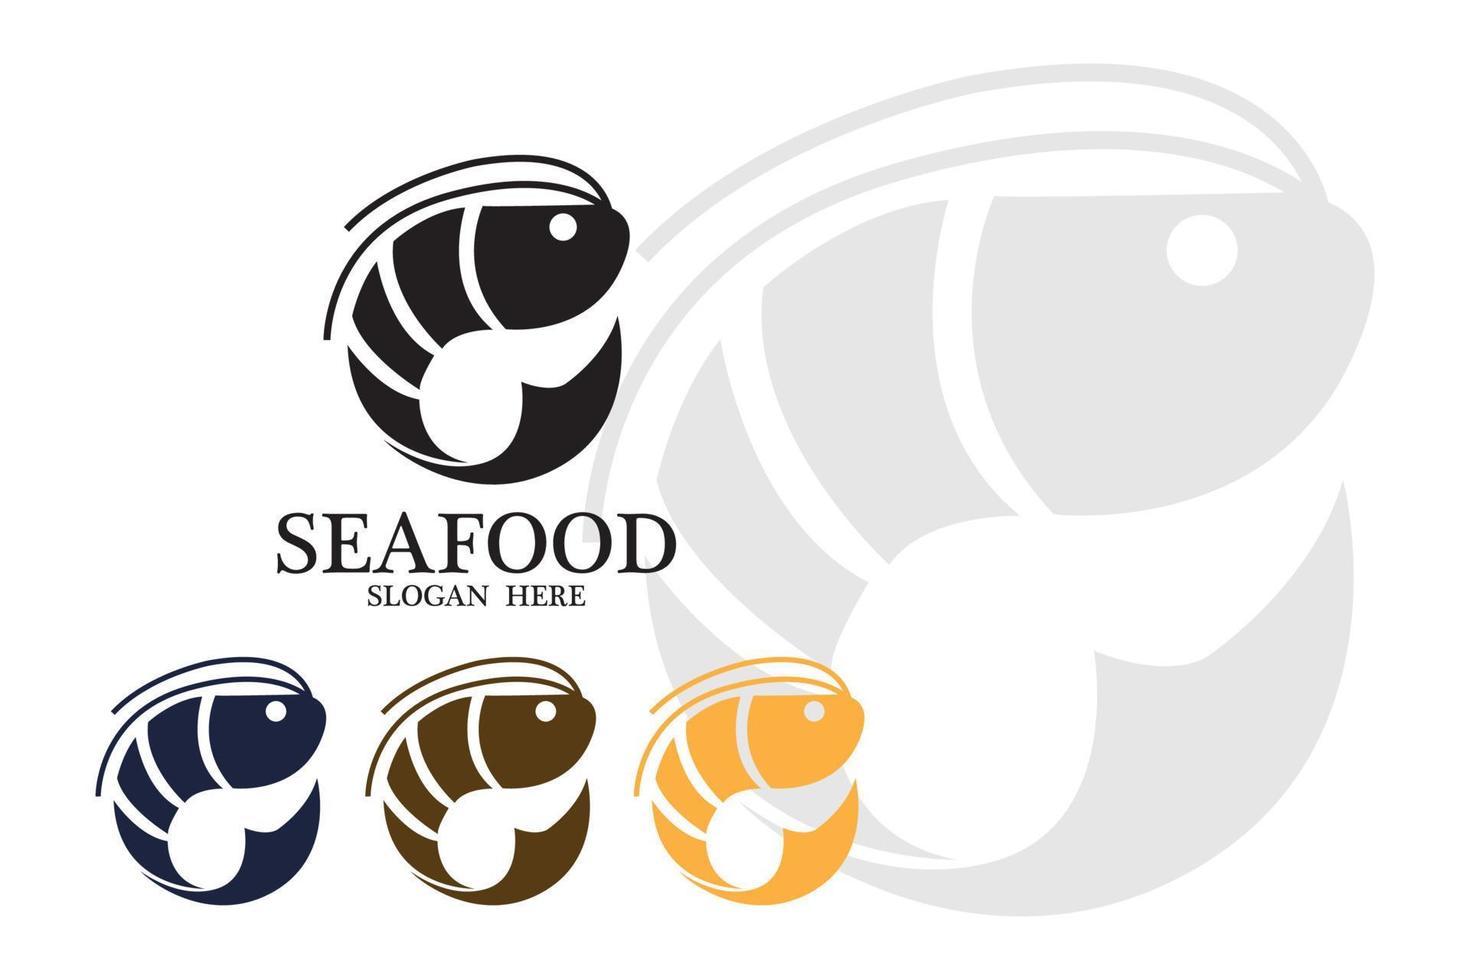 shrimp seafood logo vector icon, lobster animal, classic retro design